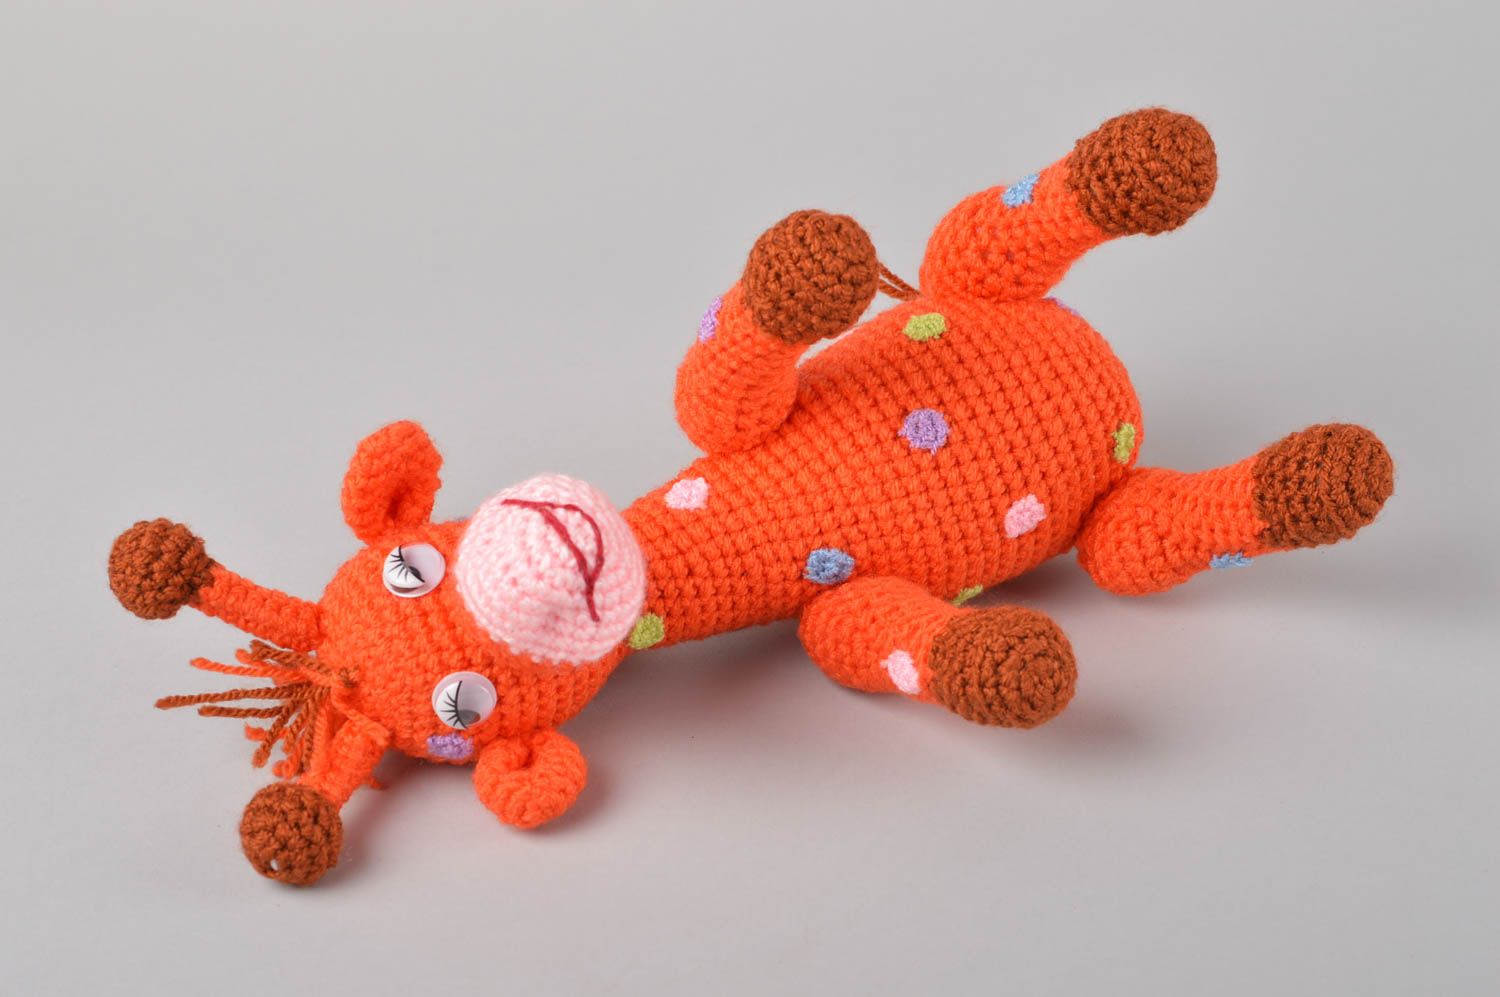 Handmade toy designer toy soft toy nursery decor gift ideas crocheted toy photo 5